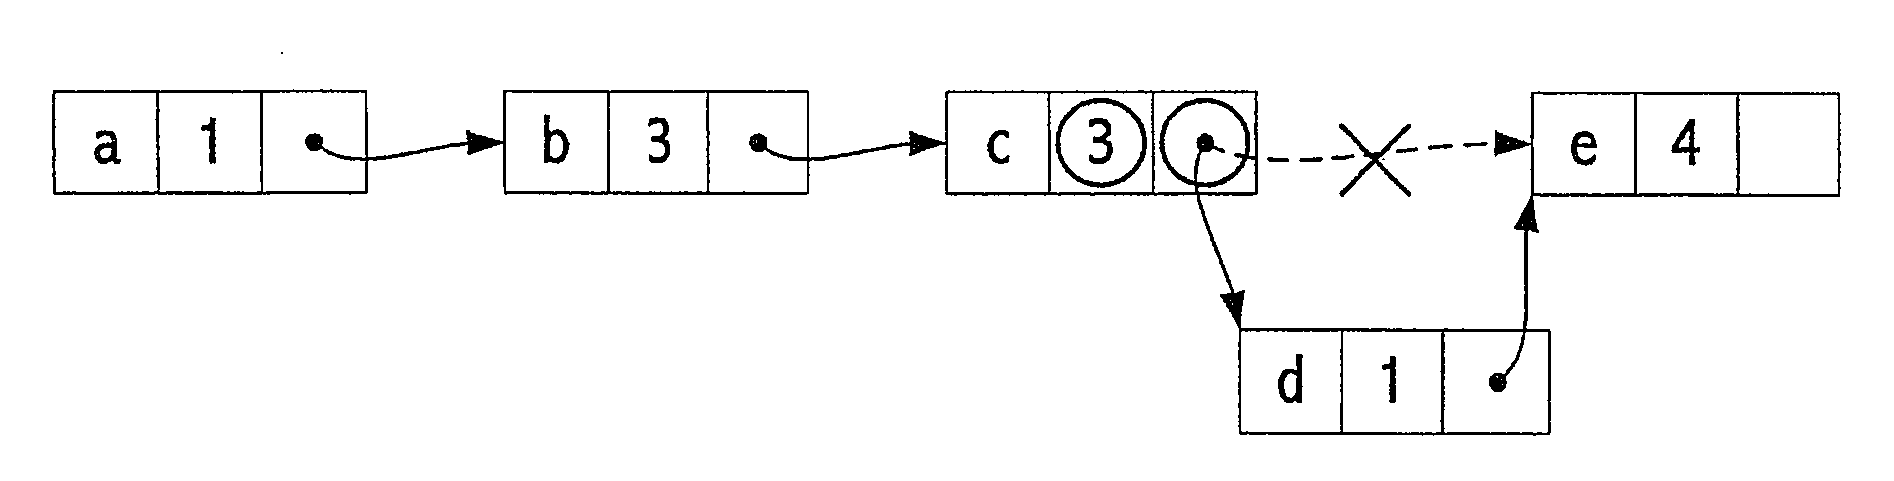 Efficient Non-Blocking K-Compare-Single-Swap Operation